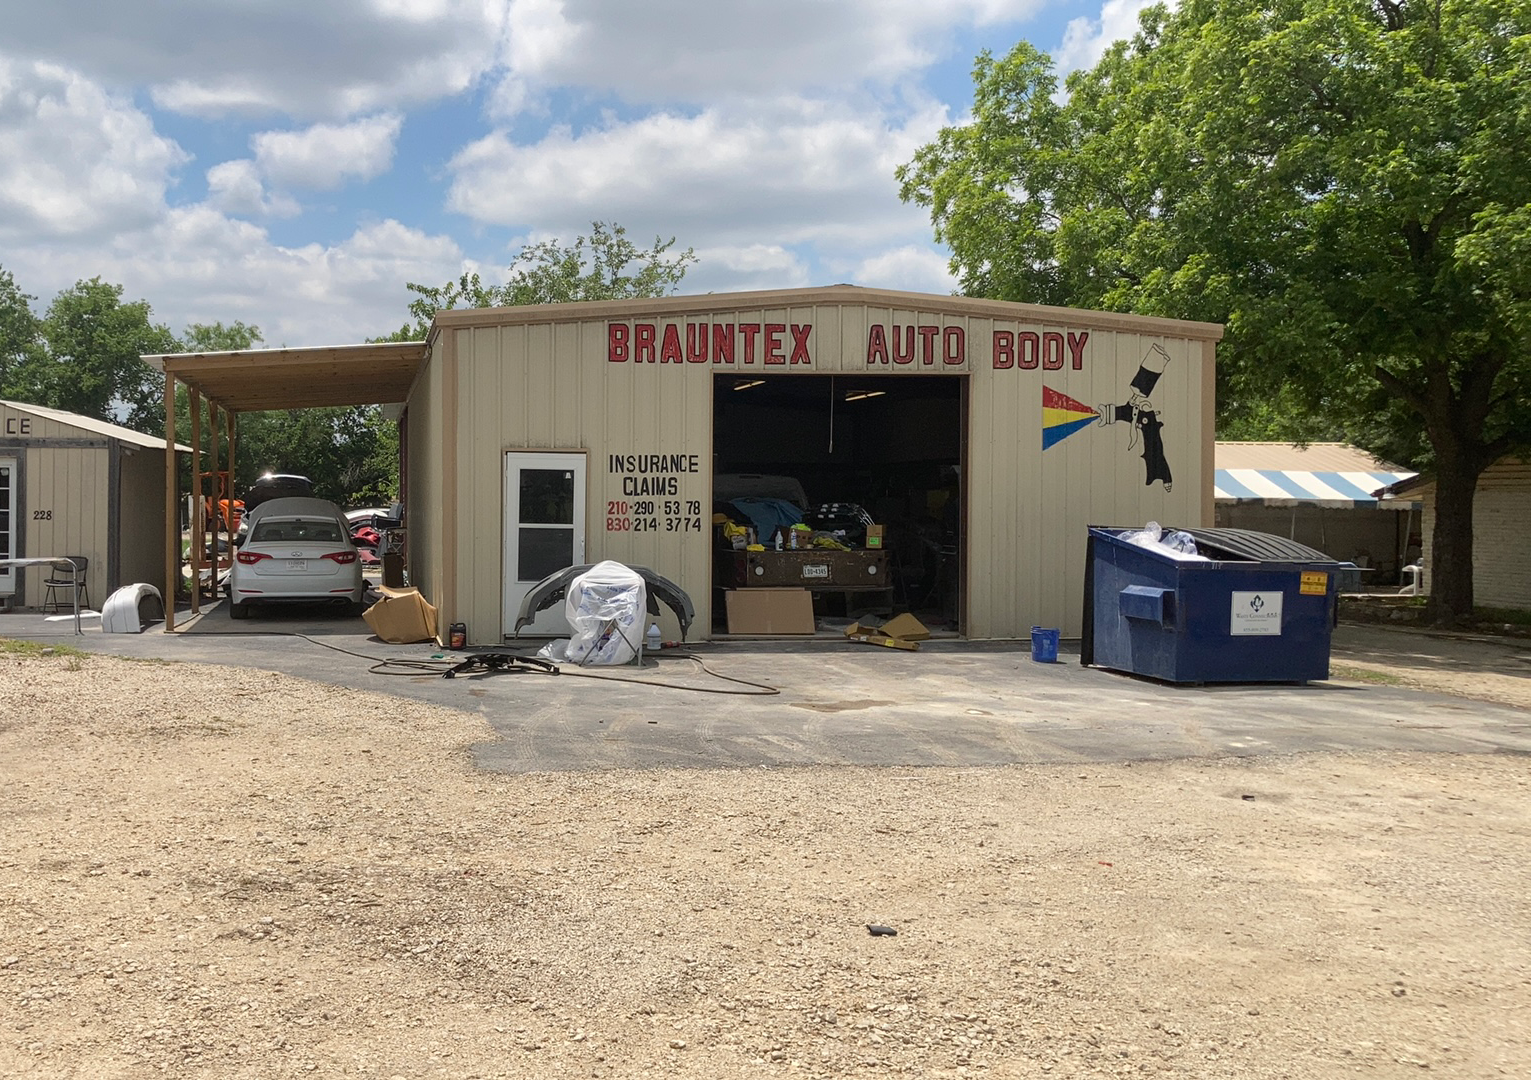 Brauntex Auto Body Shop